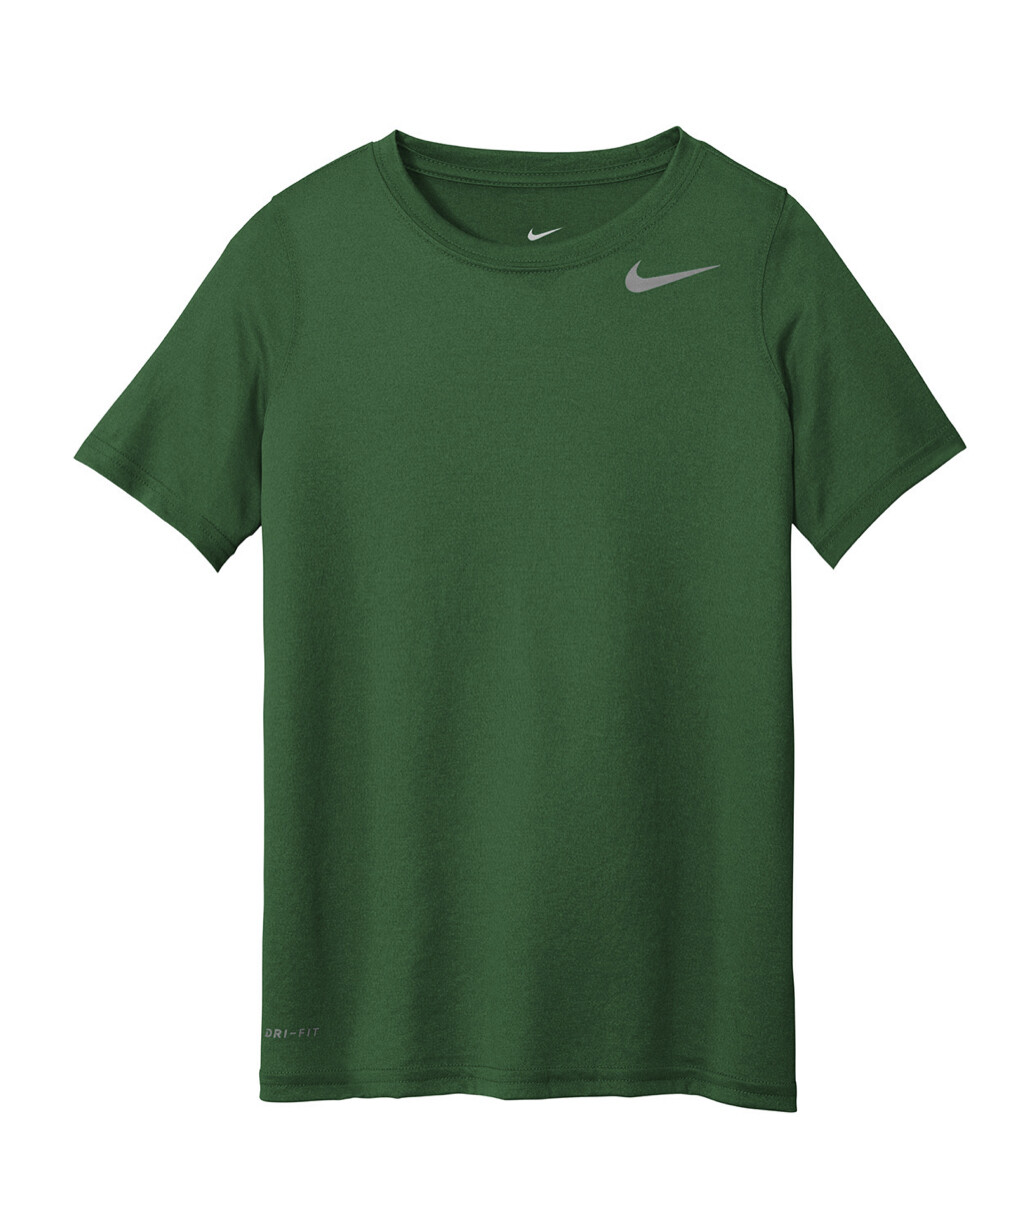 Nike Legend T-shirt - Adult